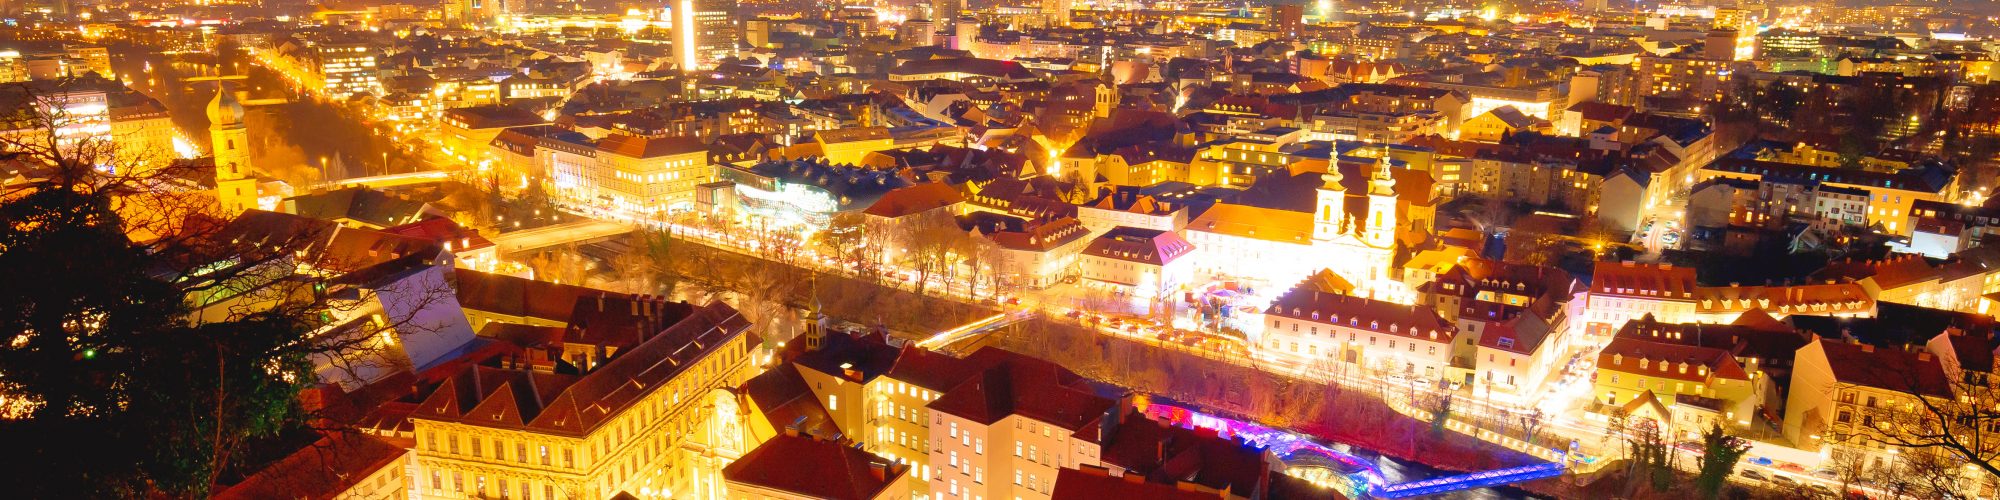 Graz cityscape evening colorful aerial view, Styria region of Austria